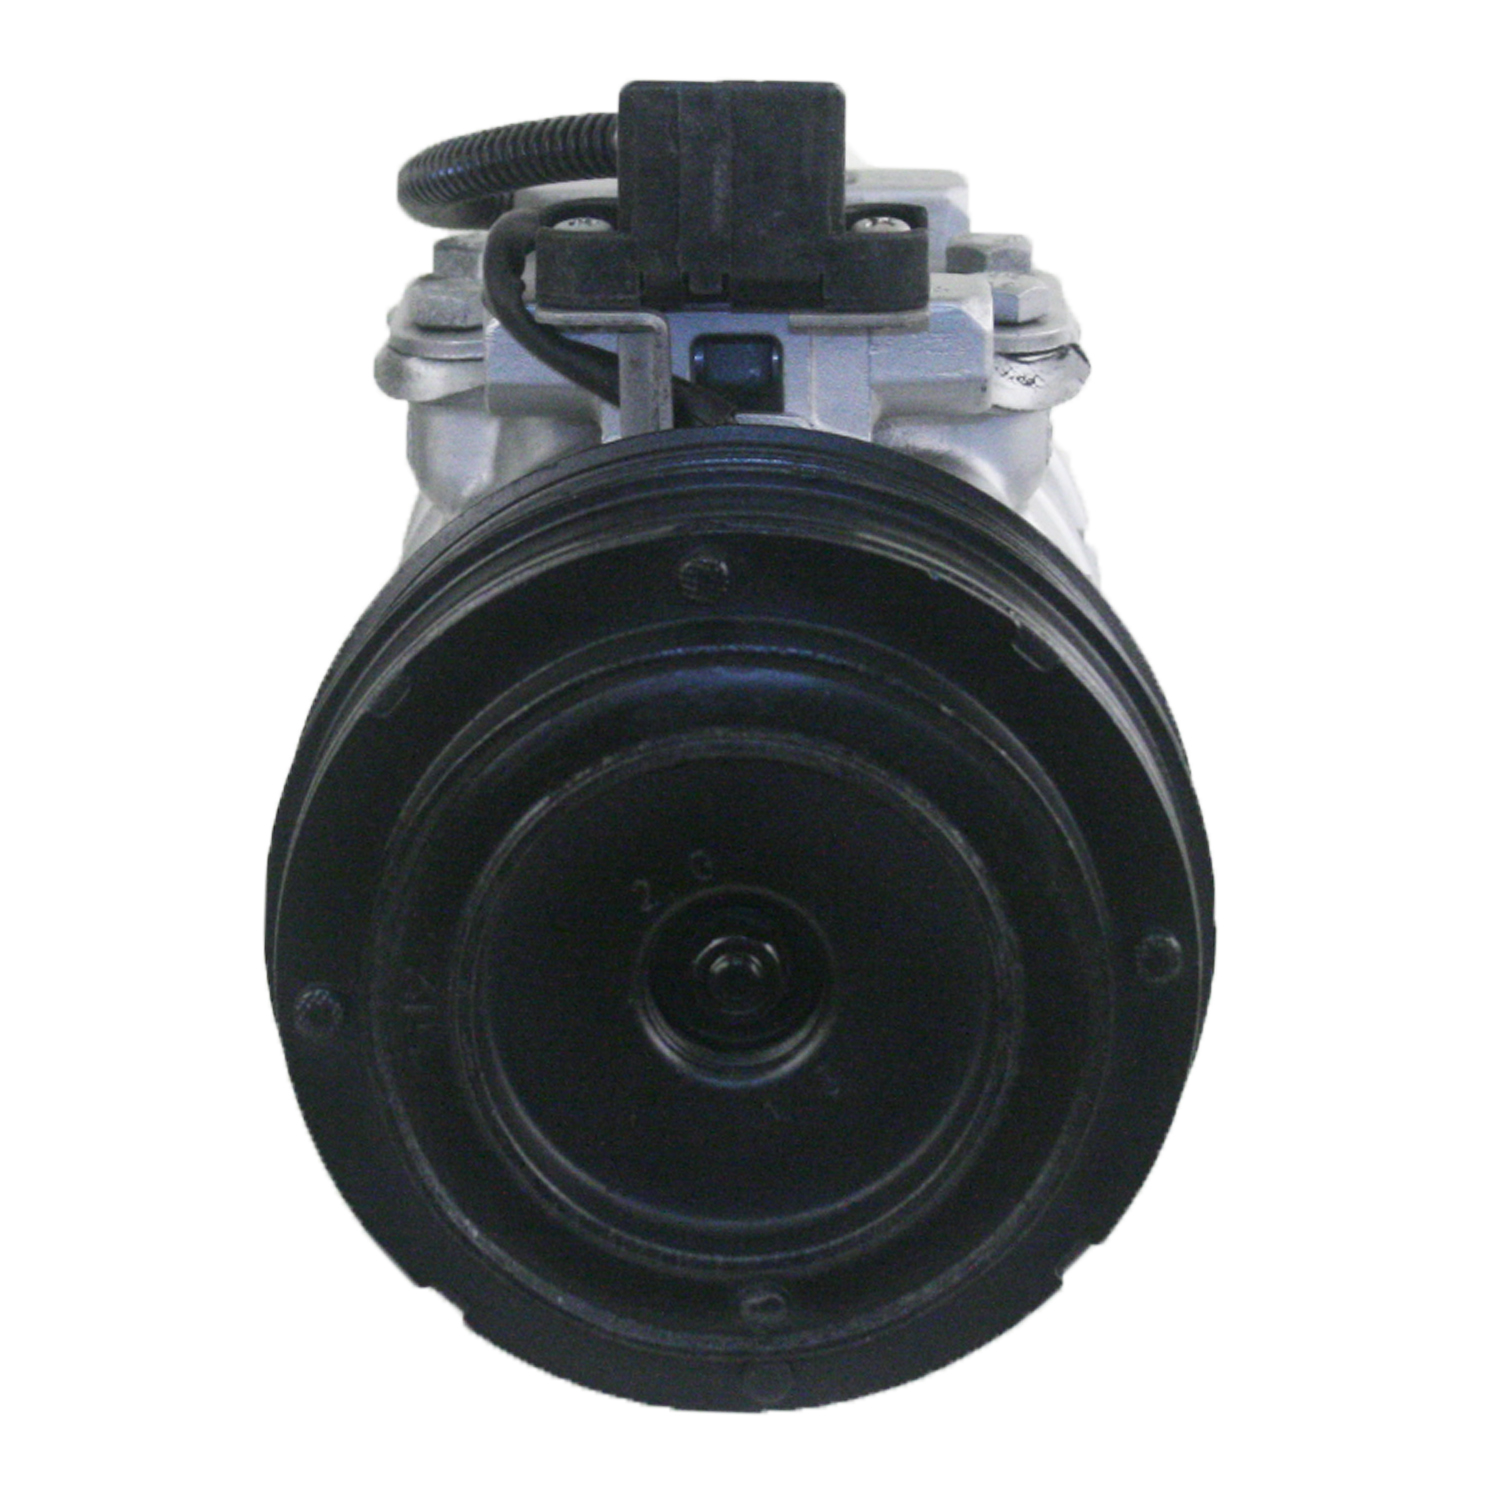 TCW Compressor 31104.601 Remanufactured Product Image field_60b6a13a6e67c